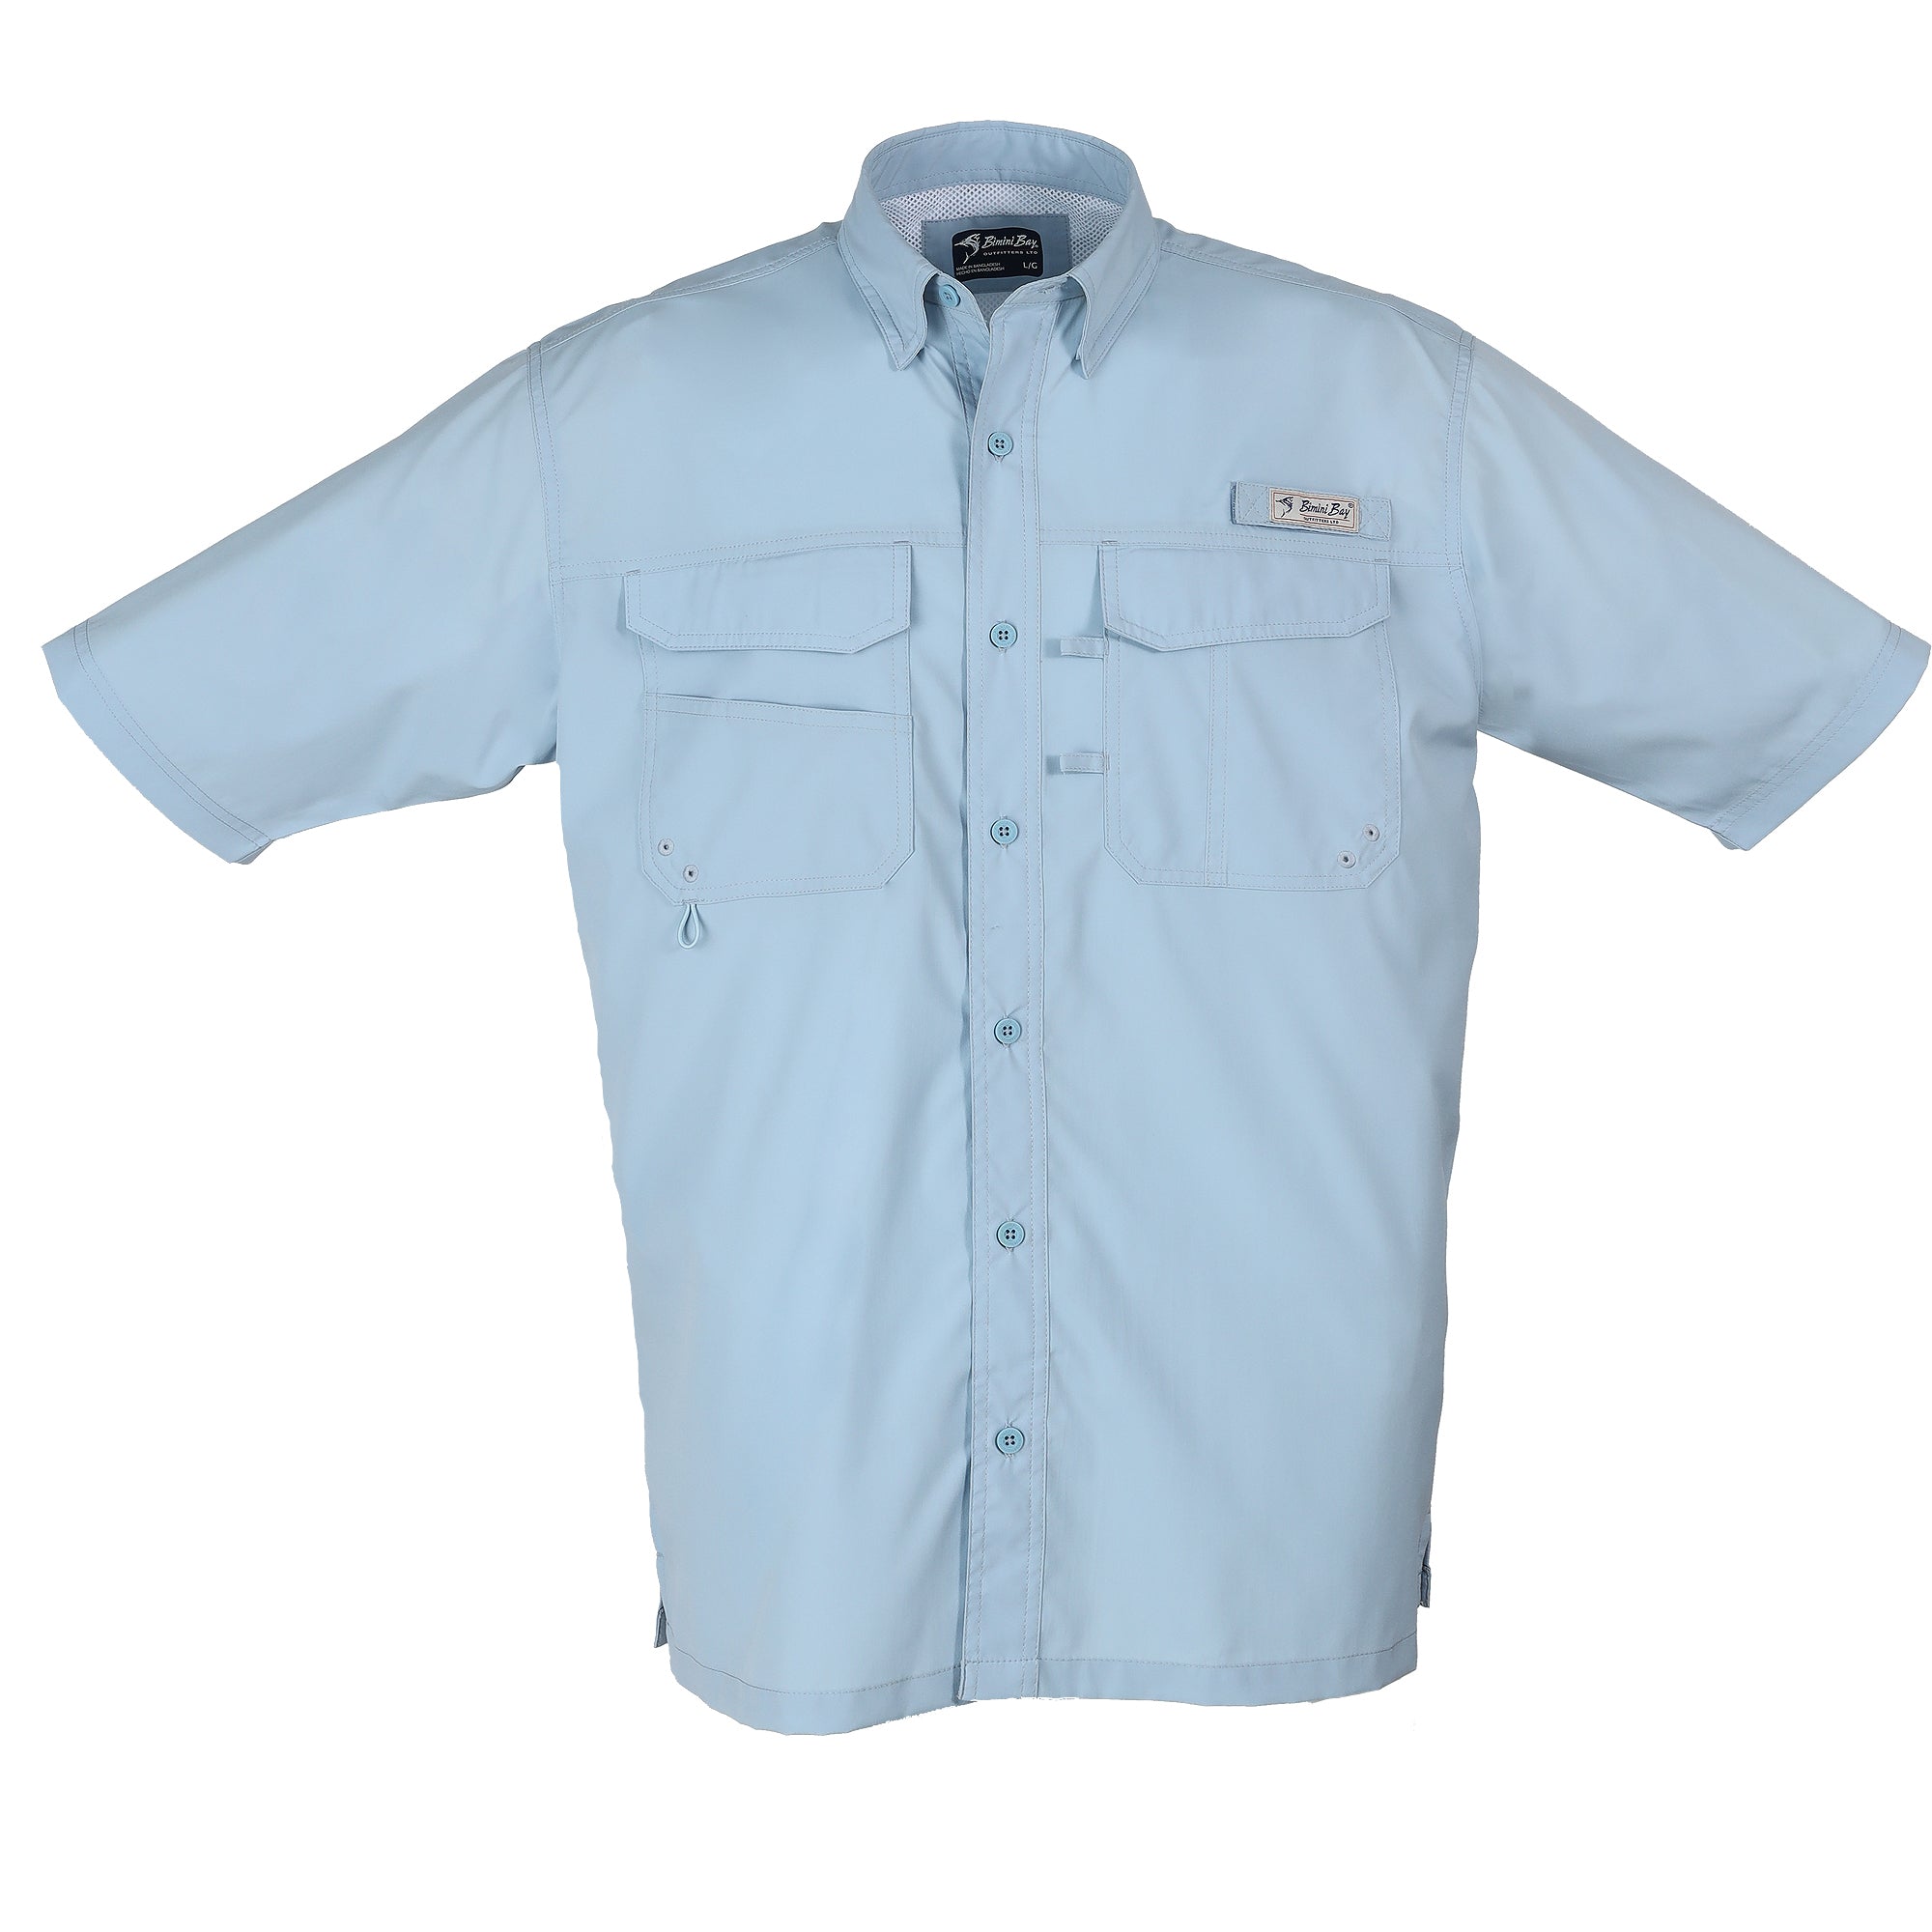 Bimini Bay Outfitters Key West Men's Short Sleeve Shirt Featuring  BloodGuard Plus